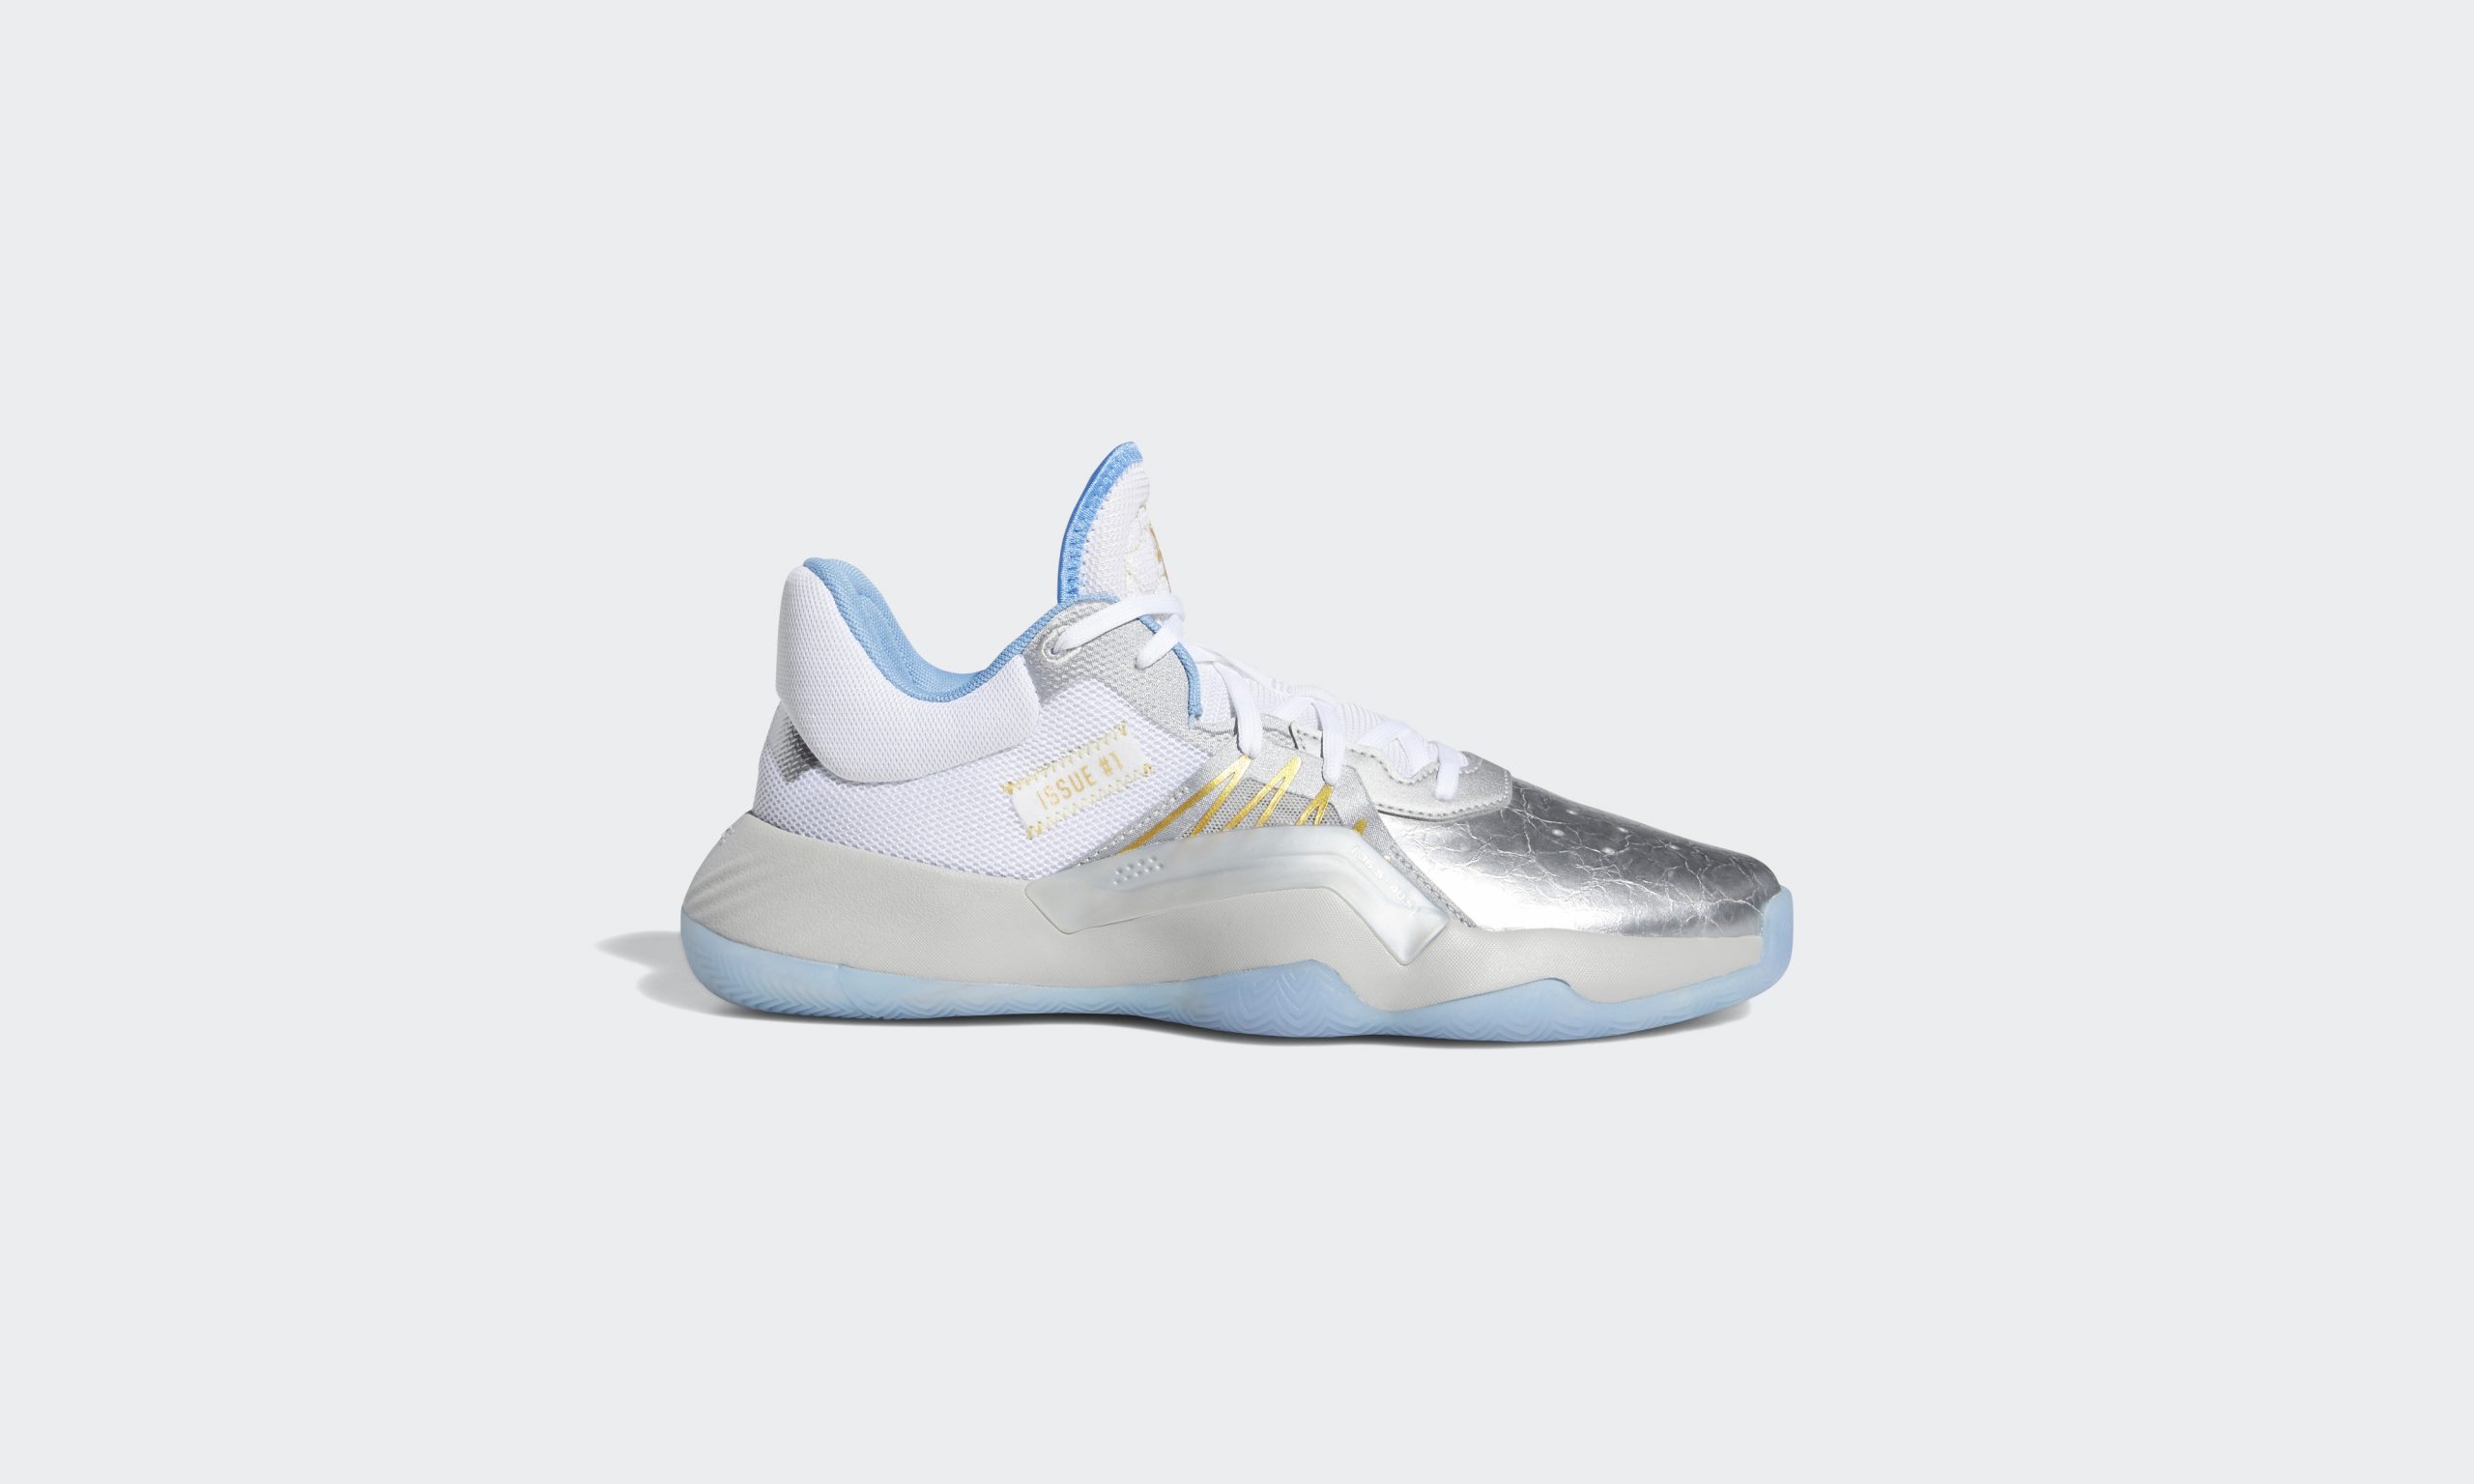 adidas Basketball 5 Generals 系列篮球鞋即将发售